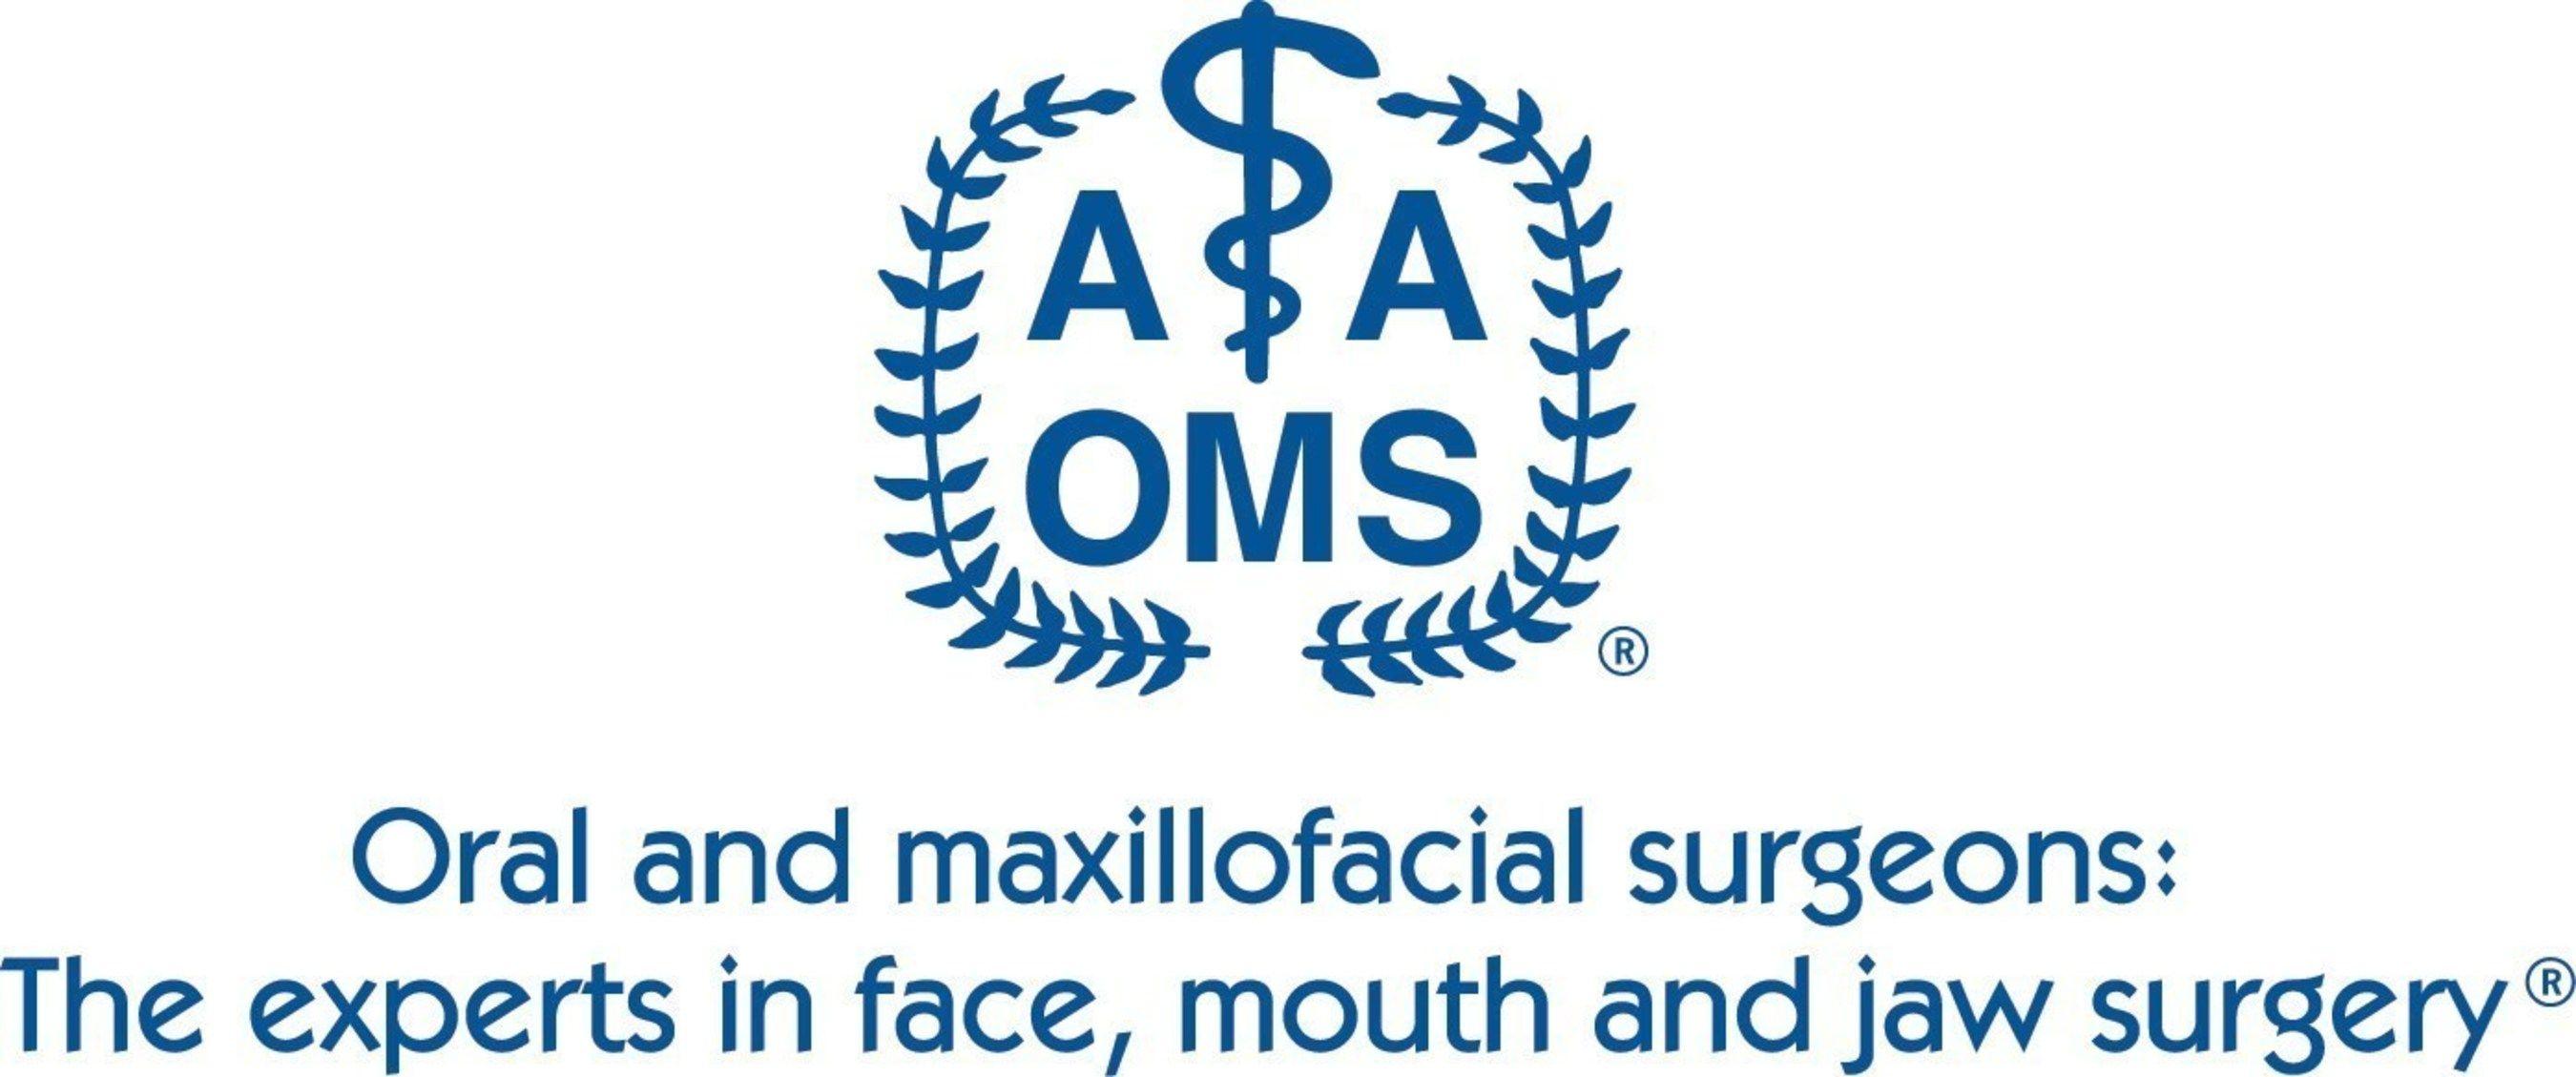 AAOMS Logo - MyOMS Profile™ Launches Through AAOMS - PBHS Inc. Partnership